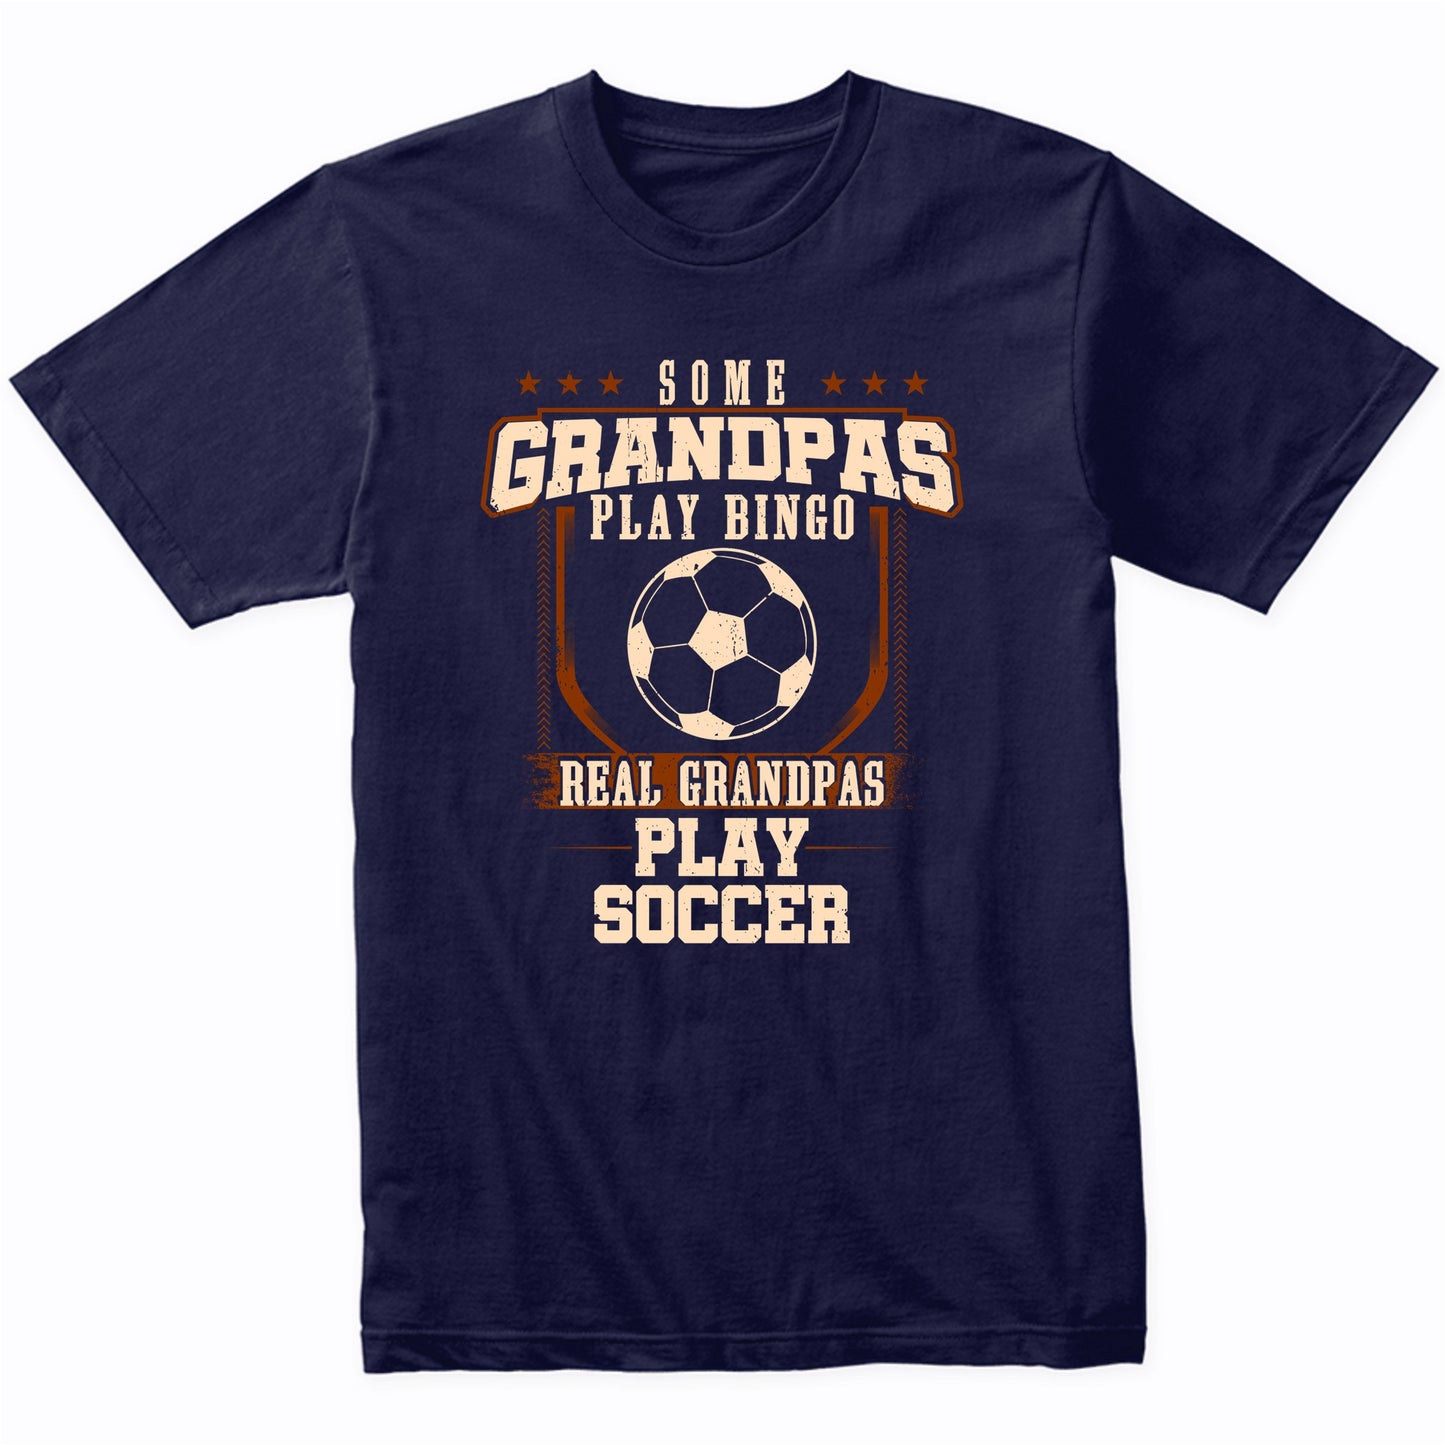 Some Grandpas Play Bingo Real Grandpas Play Soccer Shirt